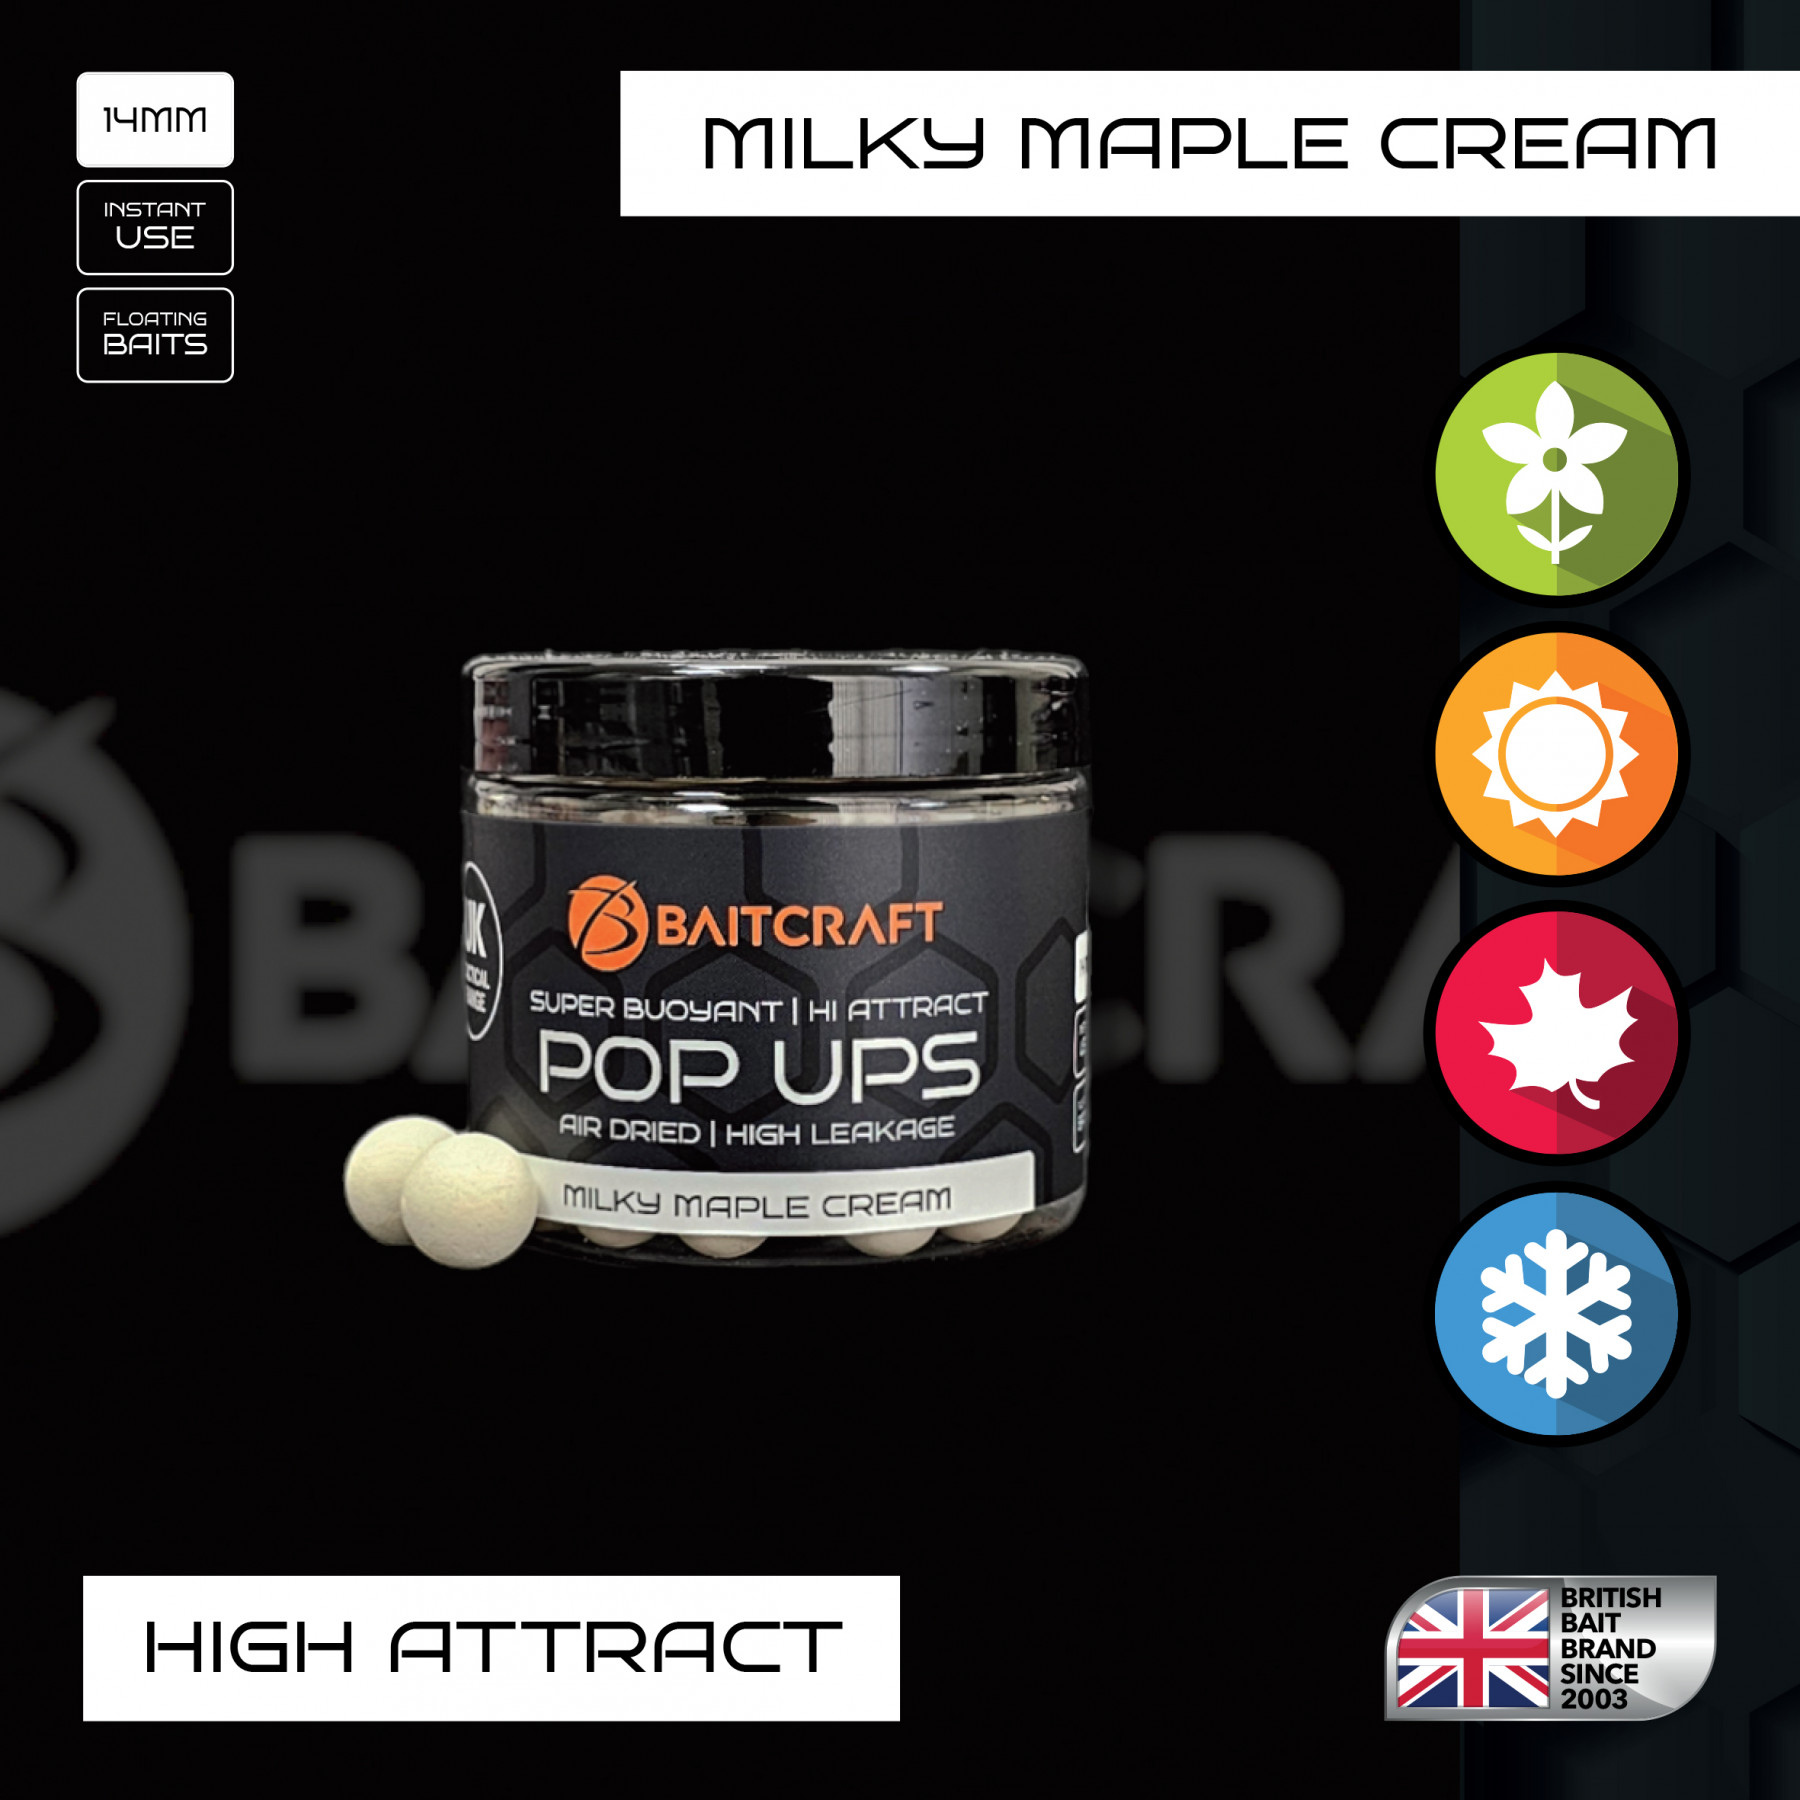 BAITCRAFT UK TACTICAL MILKY MAPLE CREAM POP UPS